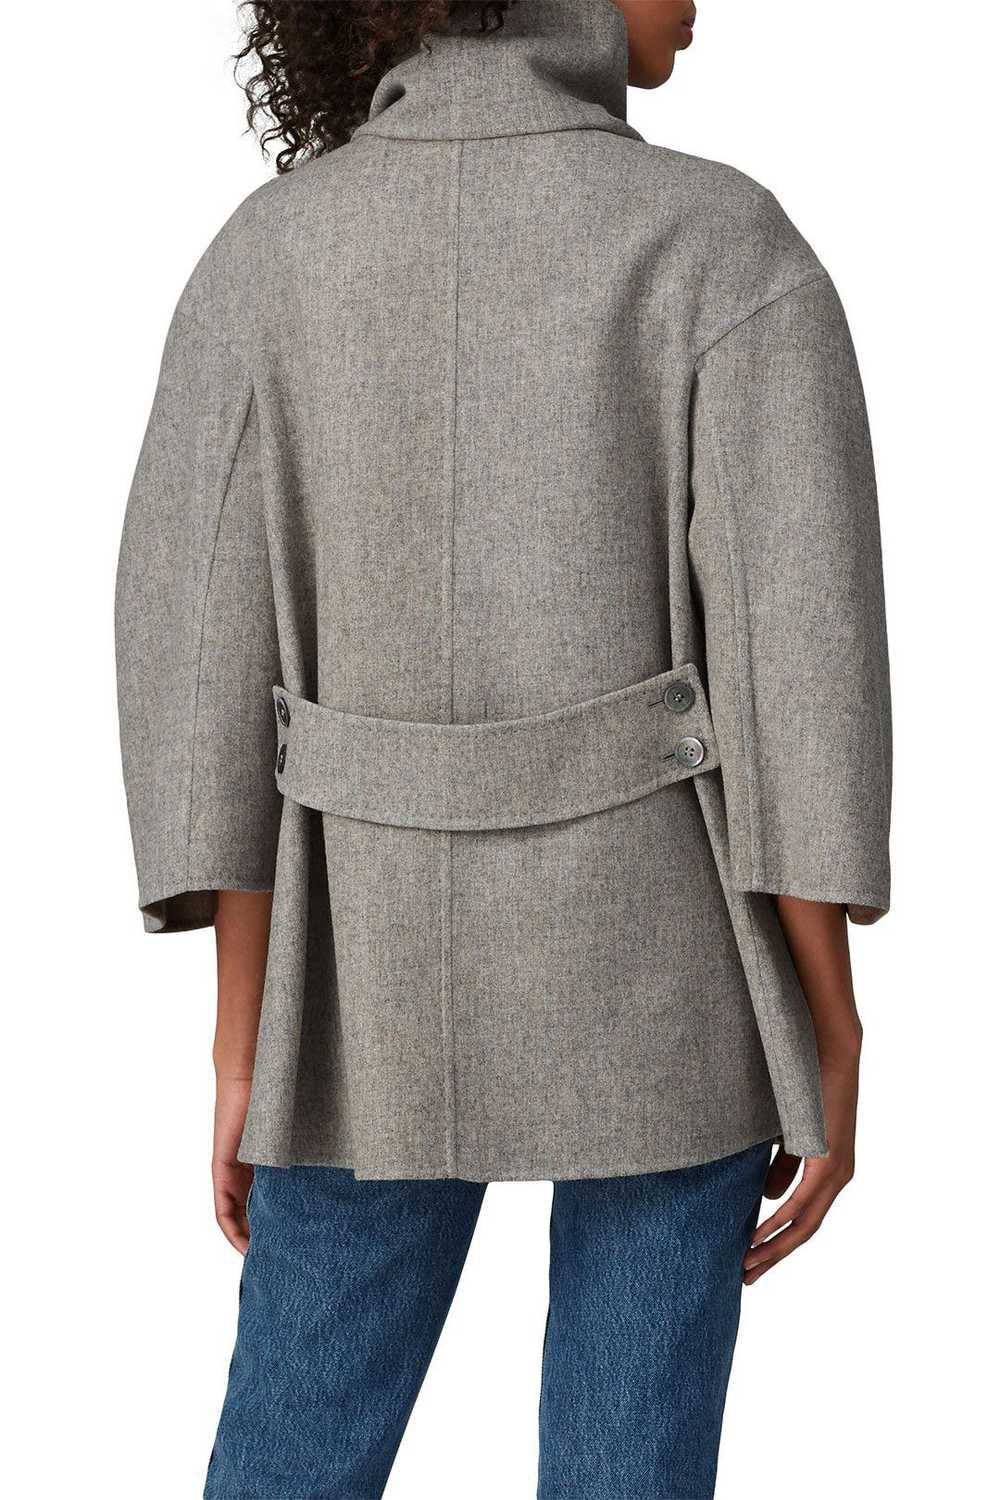 TEIJA Grey Shawl Collar Wool Coat - image 3